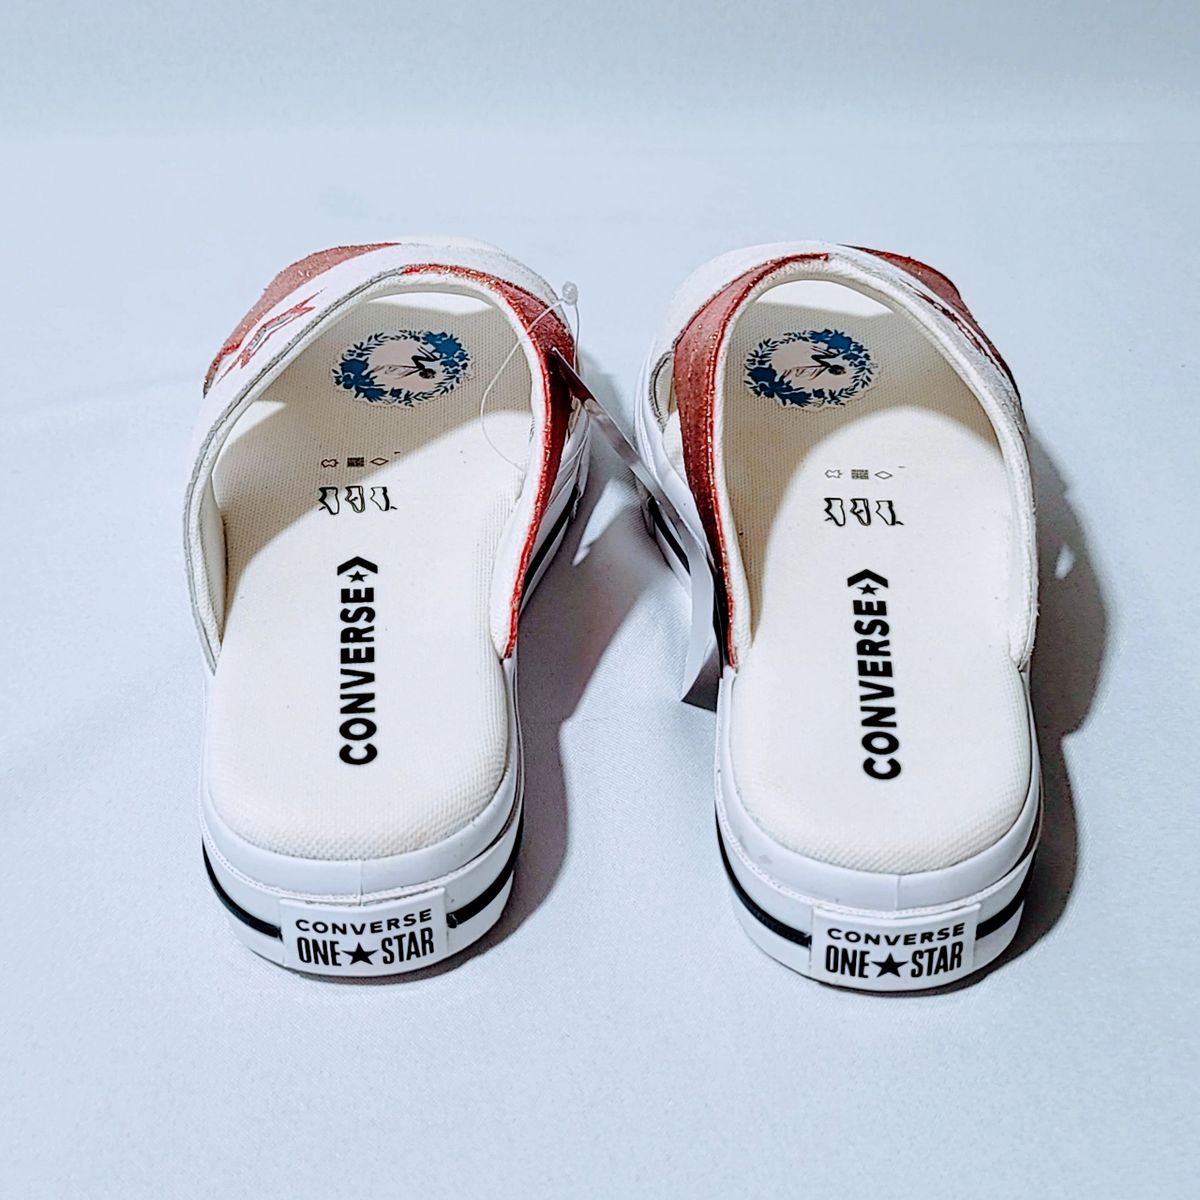 Custom MBM Converse One Star Sandals size 8.5